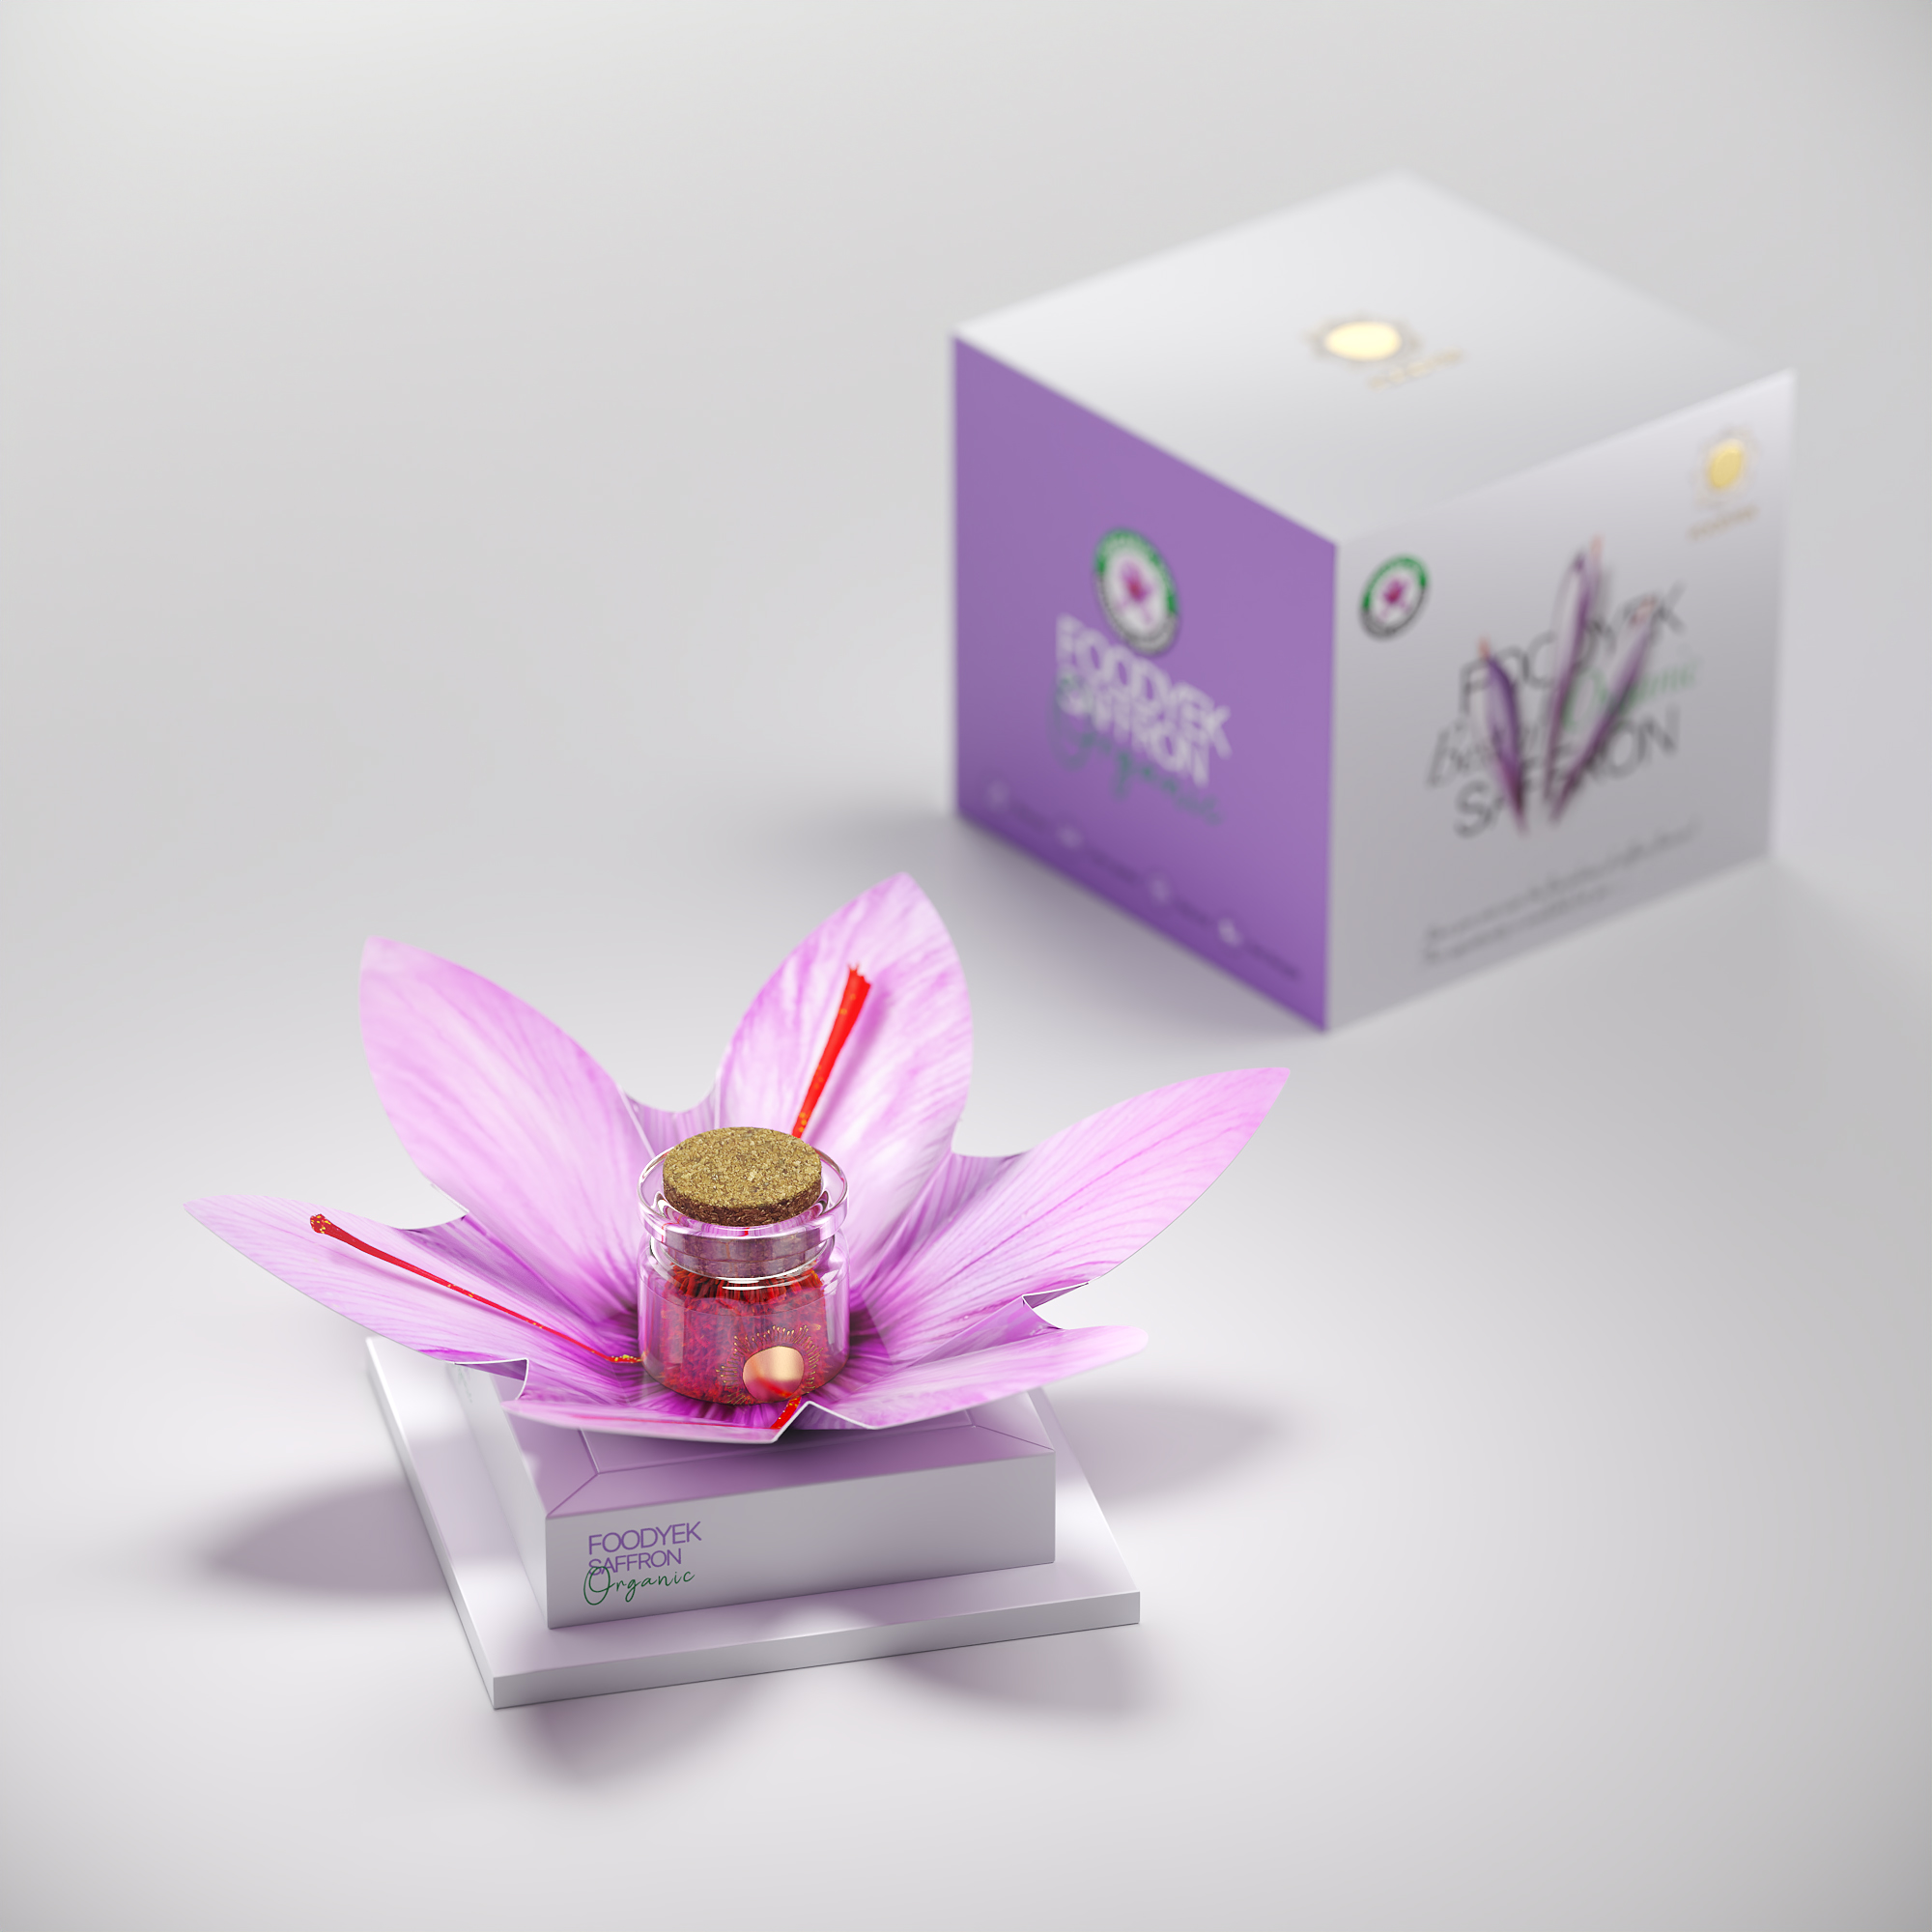 Foodyek Saffron Packaging Design